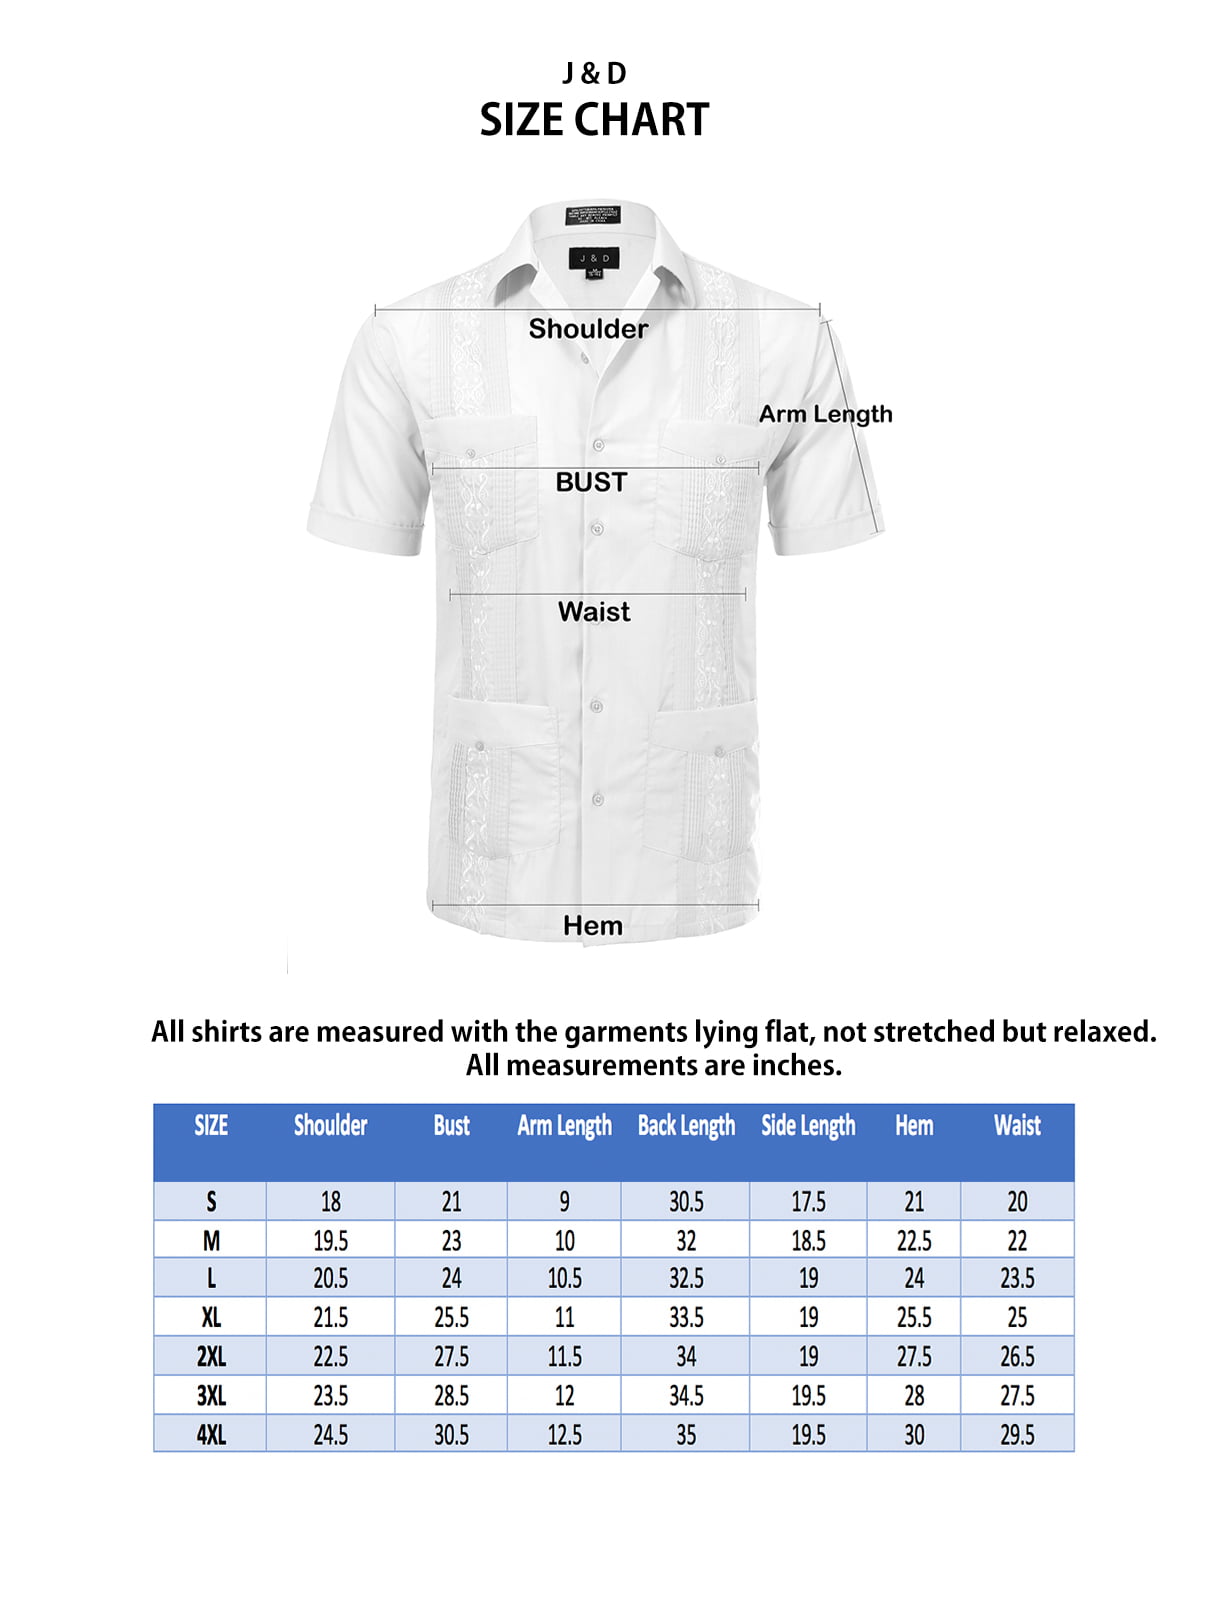 Large Men S Dress Shirt Size Chart